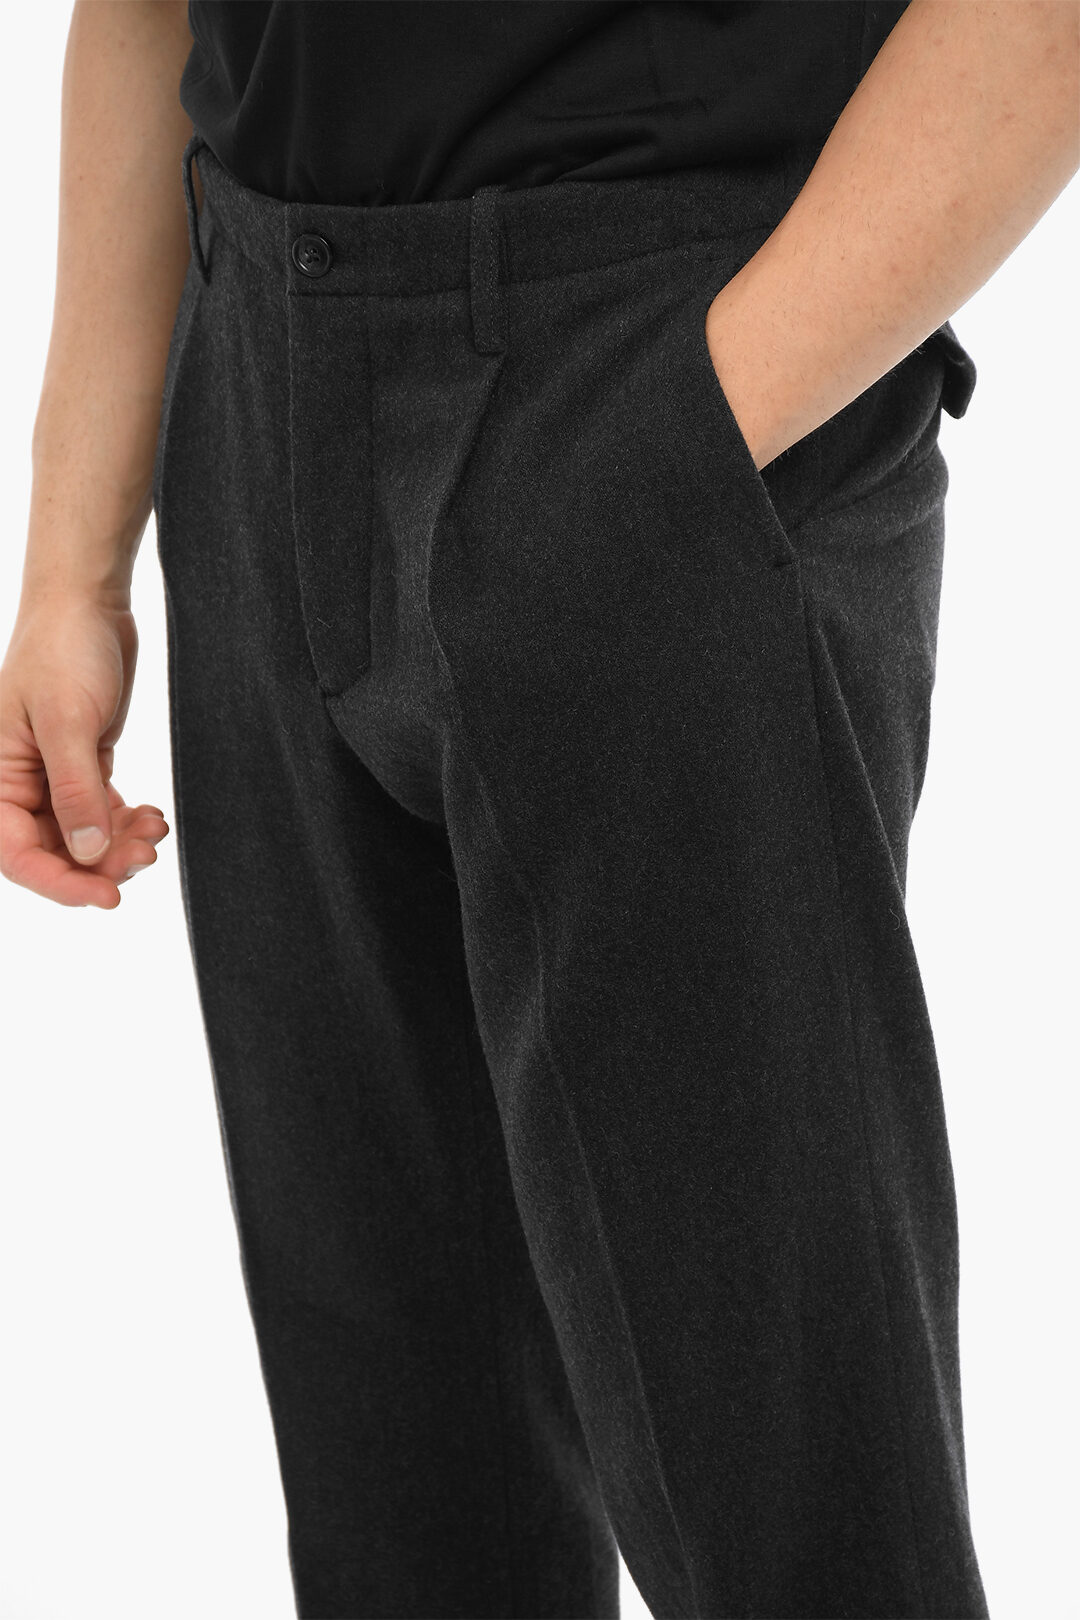 Single Pleat Brad Fit Capri Pants with belt loops